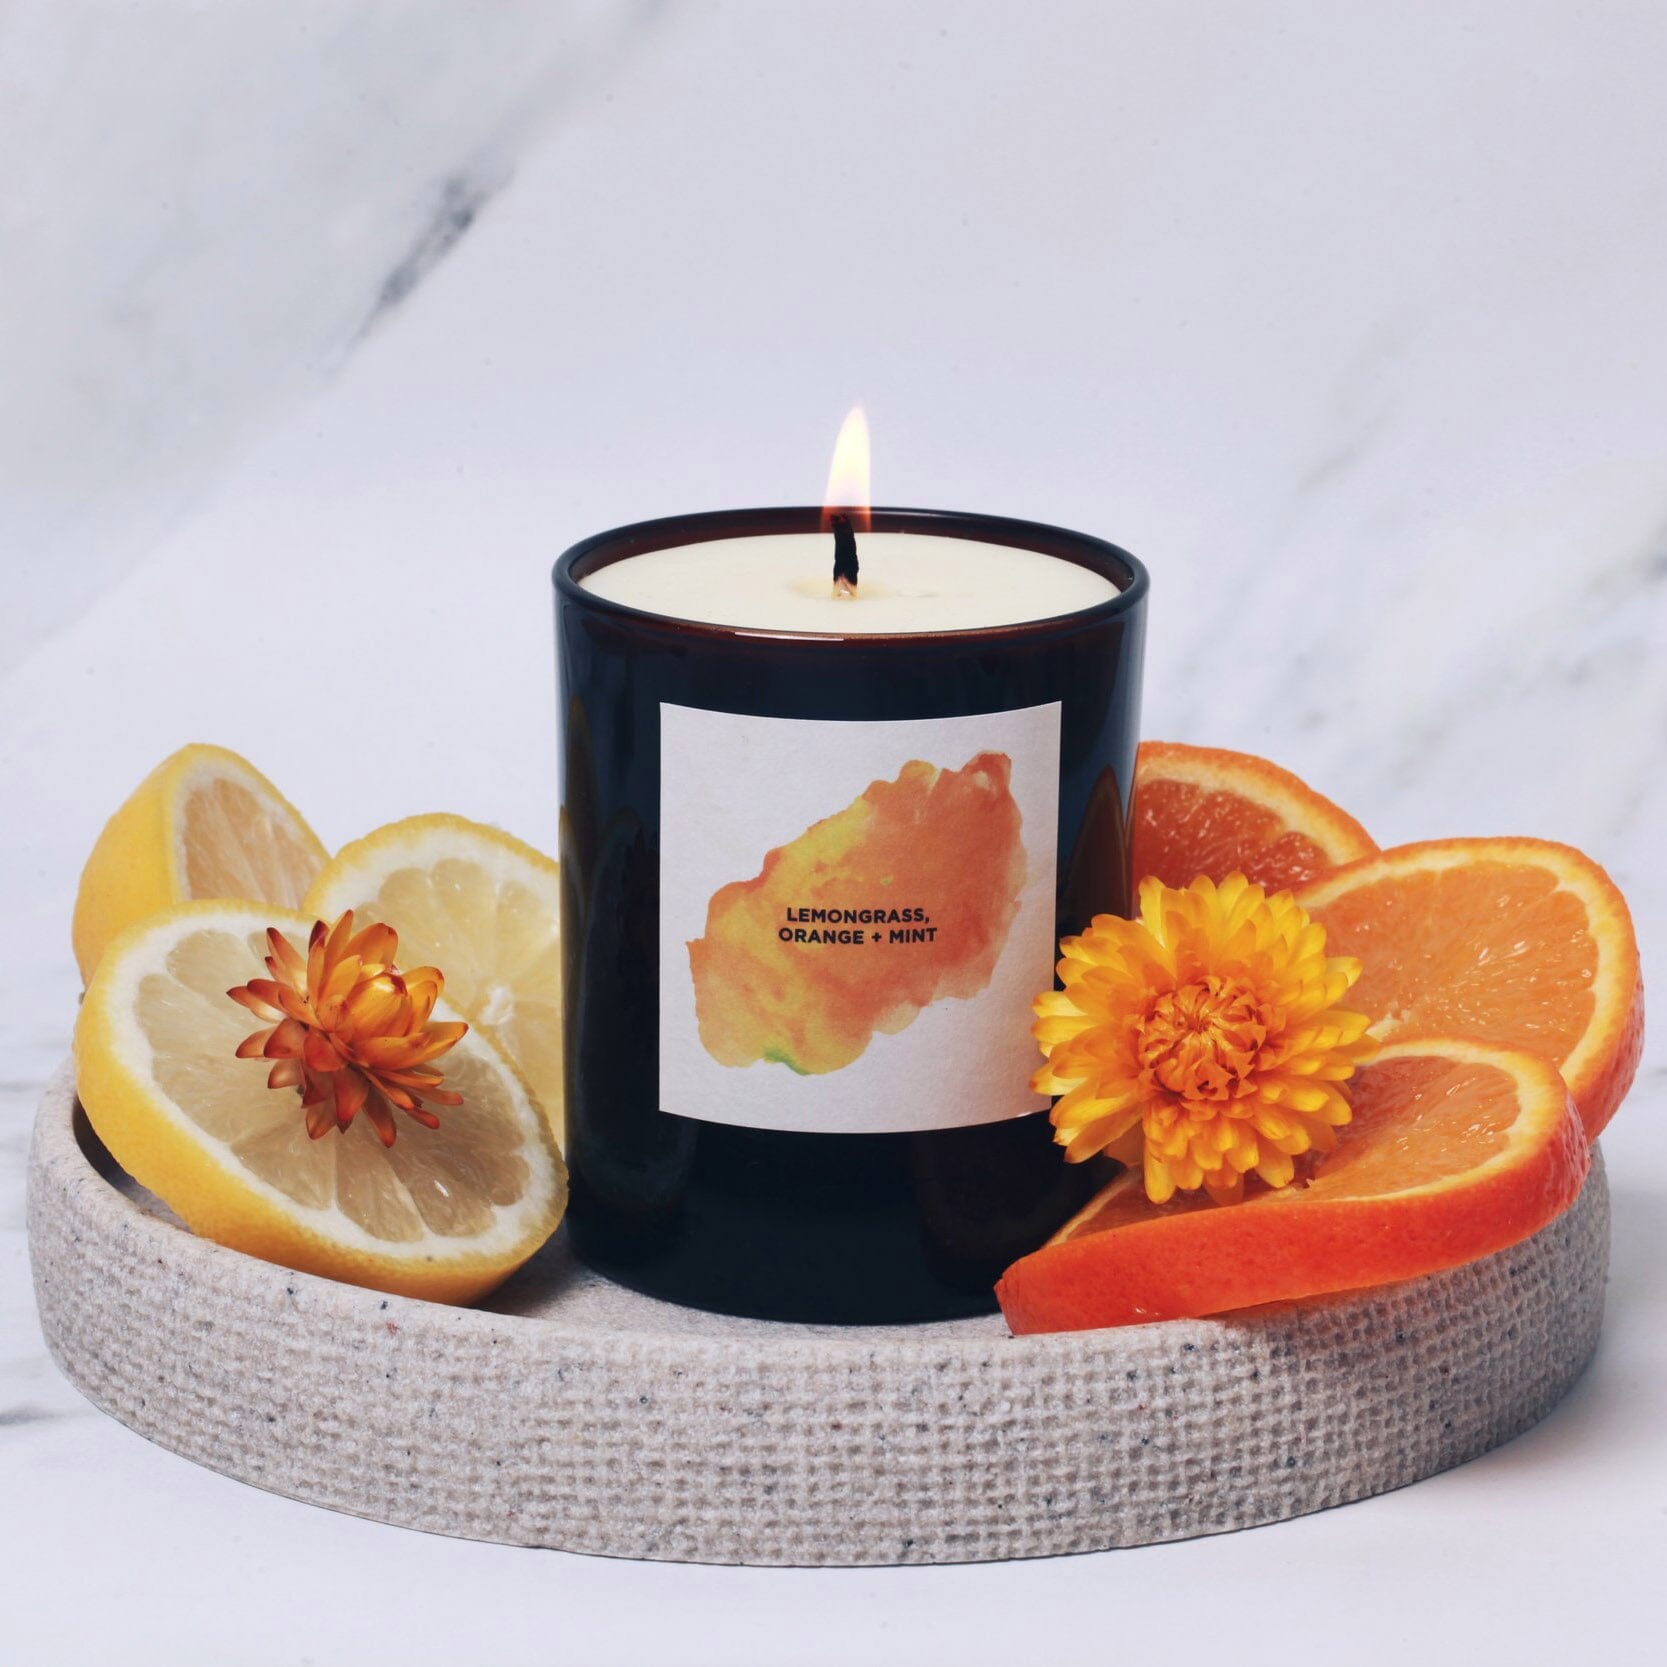 Luxury Amber - Lemongrass, Wild Orange, Mint Aromatherapy Candle Kerzen Self Care Co. - Genuine Selection